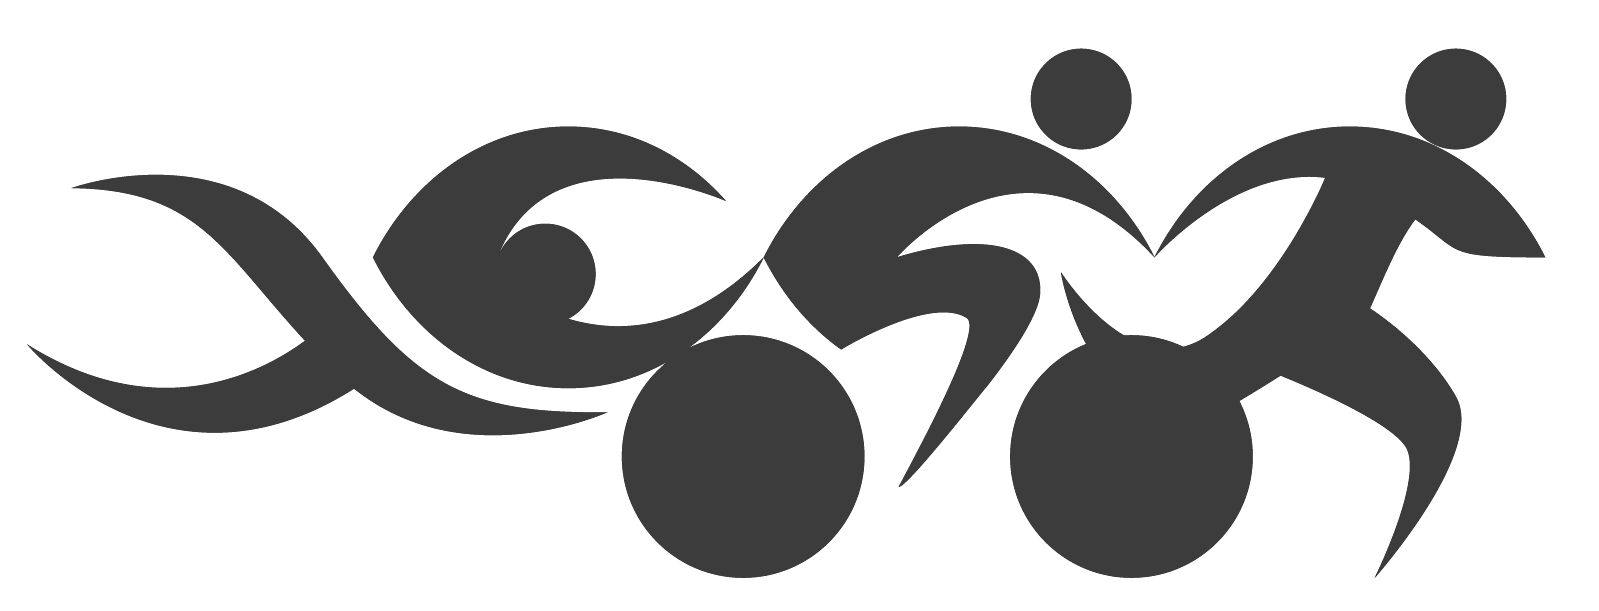 Triathlete Logo - Home - Barrett LeHardy, Triathlete